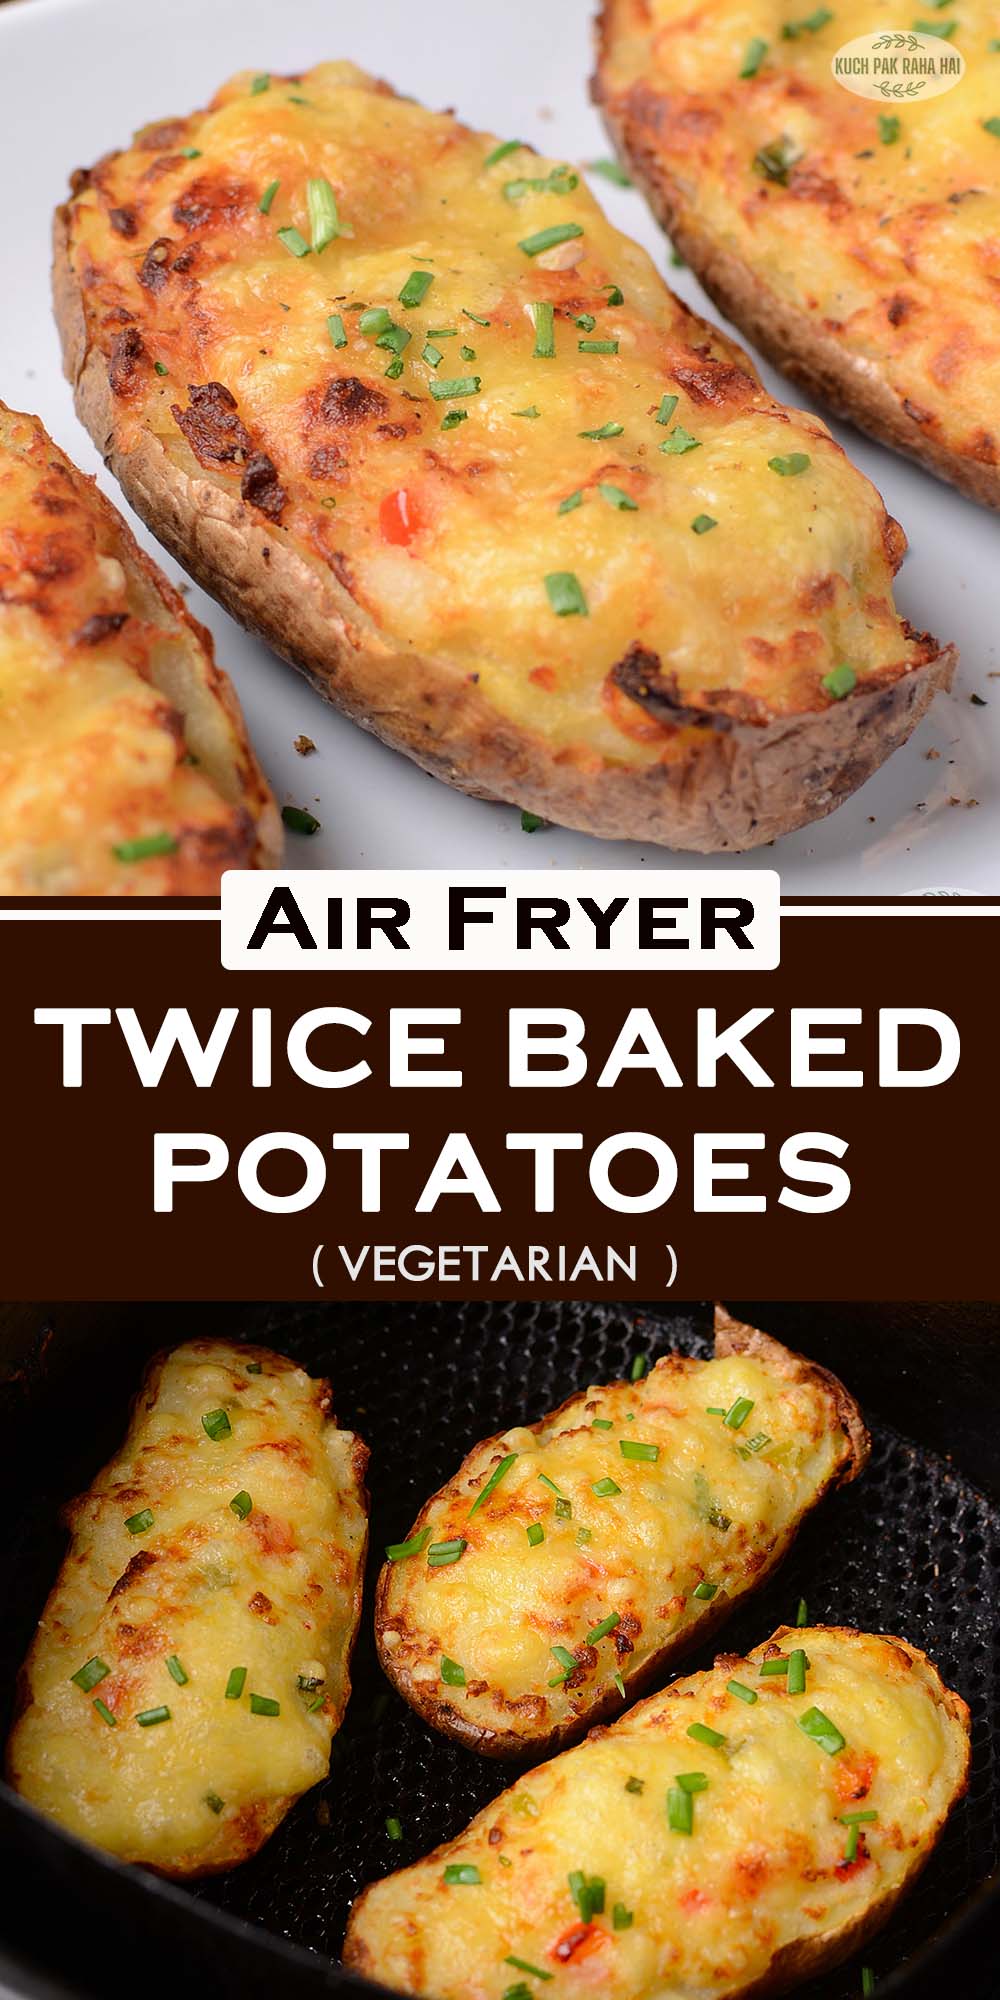 Air fryer twice baked potatoes easy recipe.